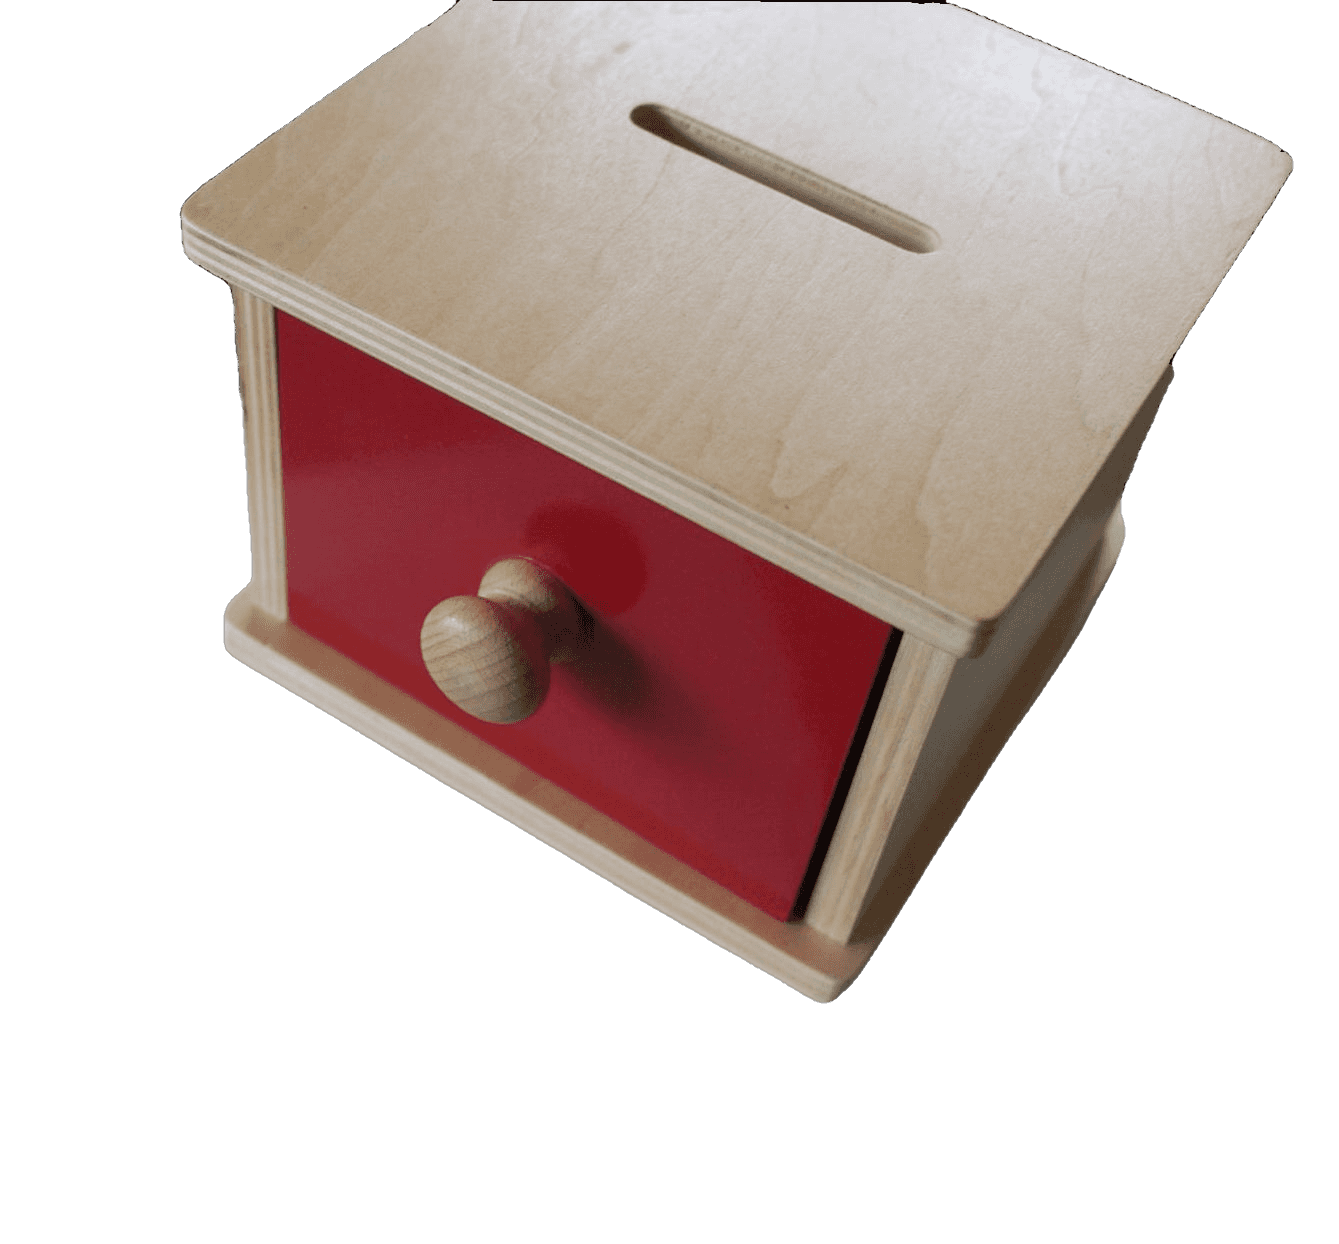 Boîte d'Encastrement Tiroir et Jetons Montessori - MaMontessoriBox